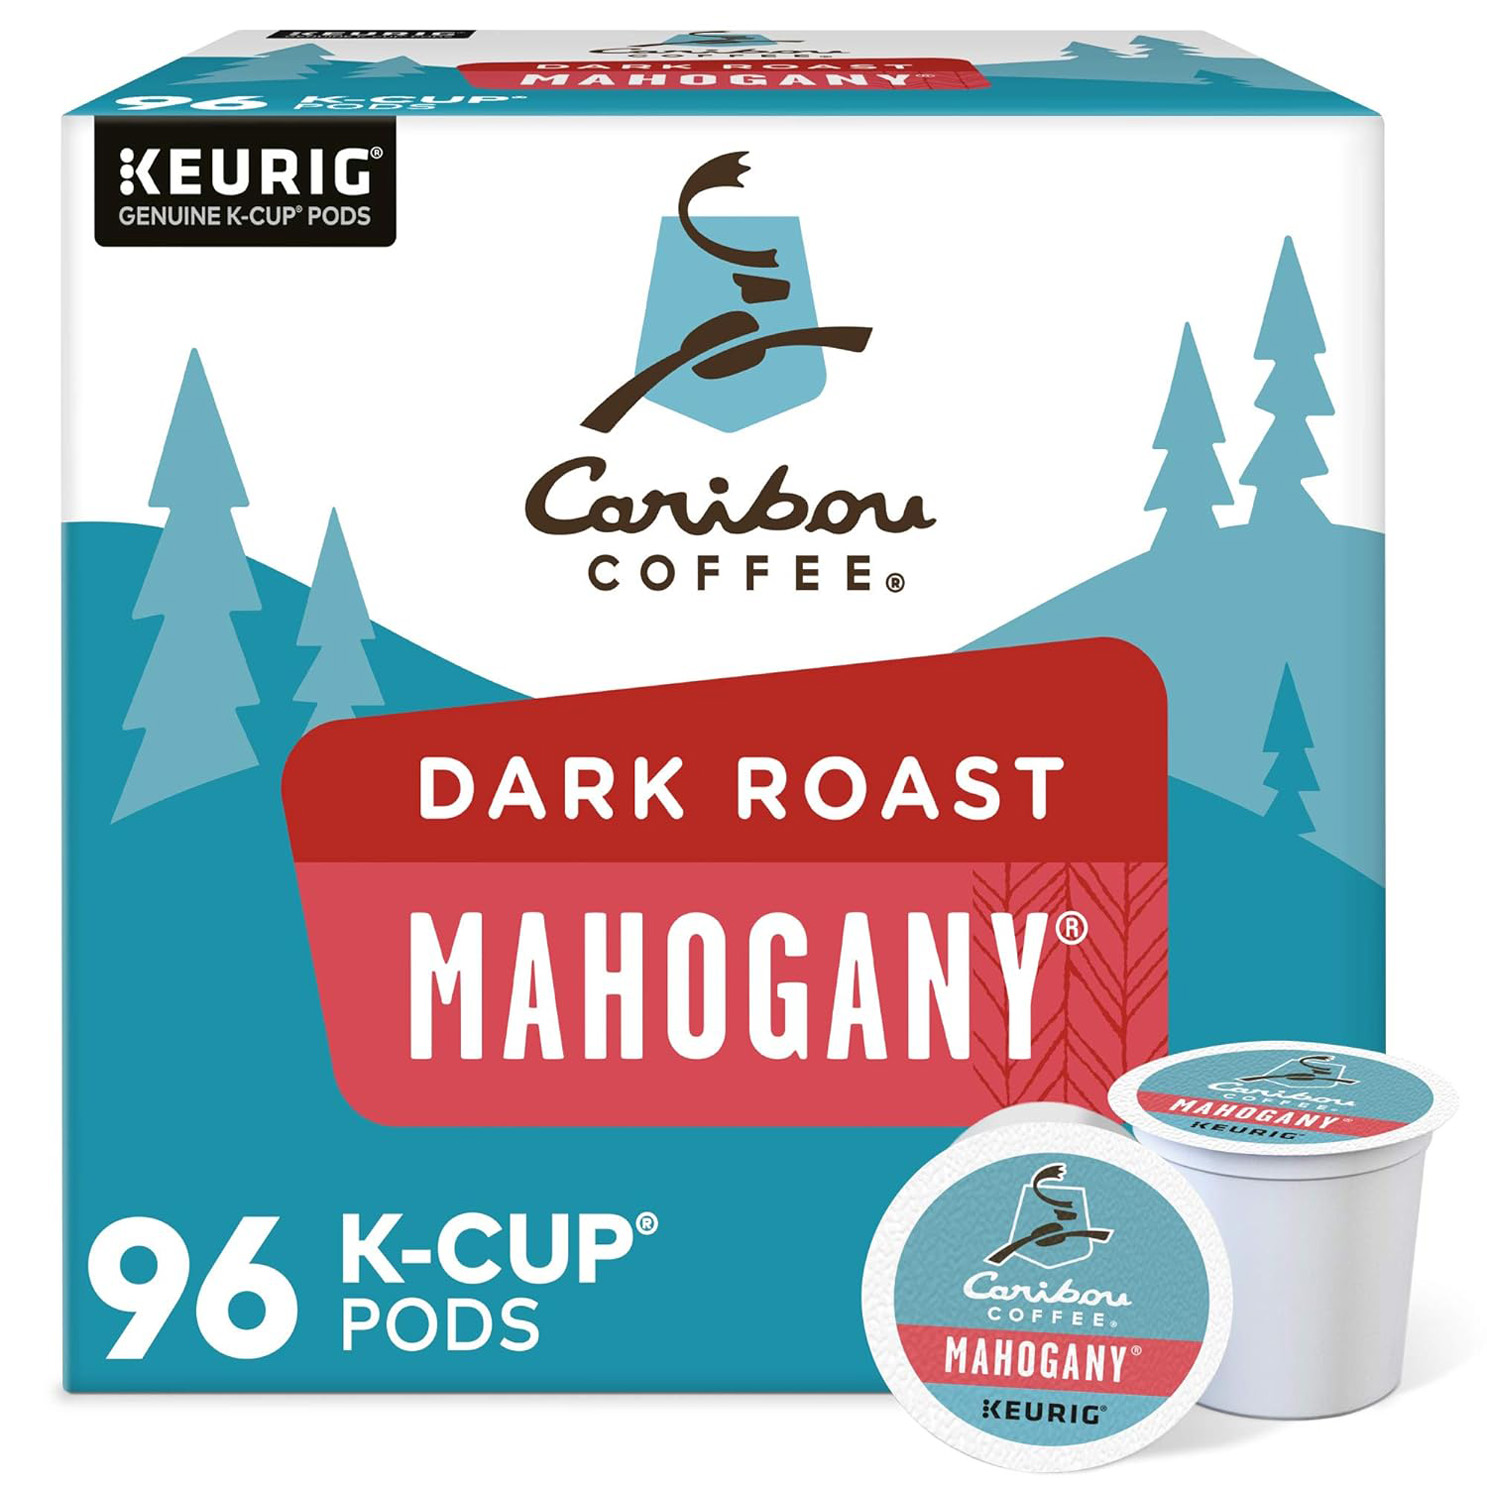 Caribou Coffee Mahogany, Single-Serve Keurig K-Cup Pods, Dark Roast Coffee